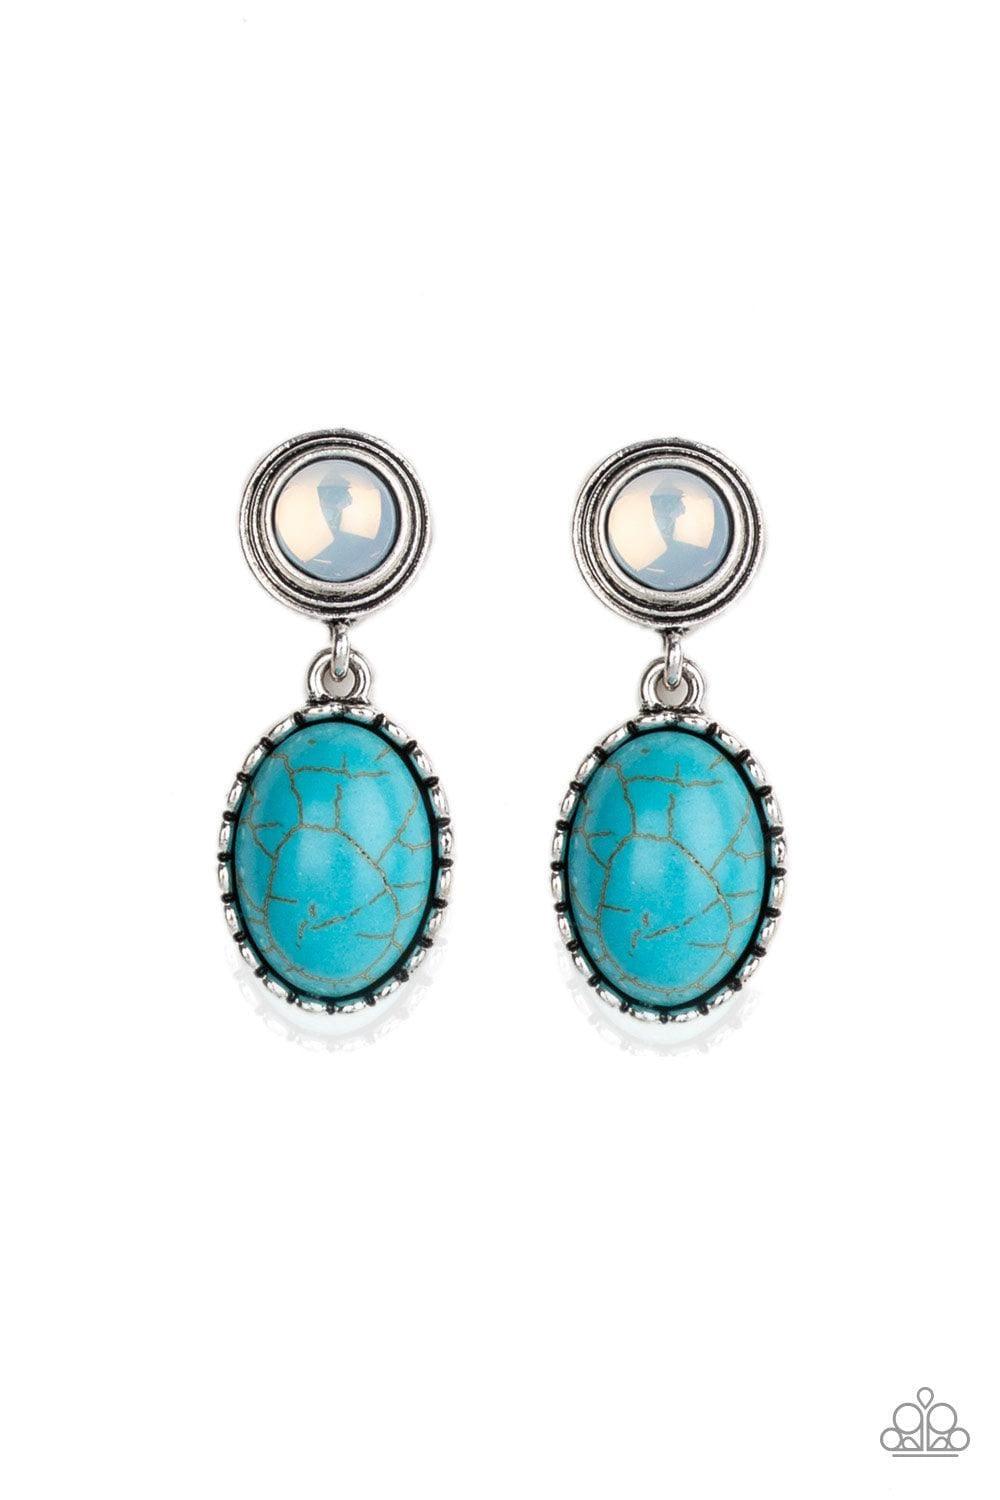 Paparazzi Accessories - Western Oasis - Blue Turquoise Earrings - Bling by JessieK